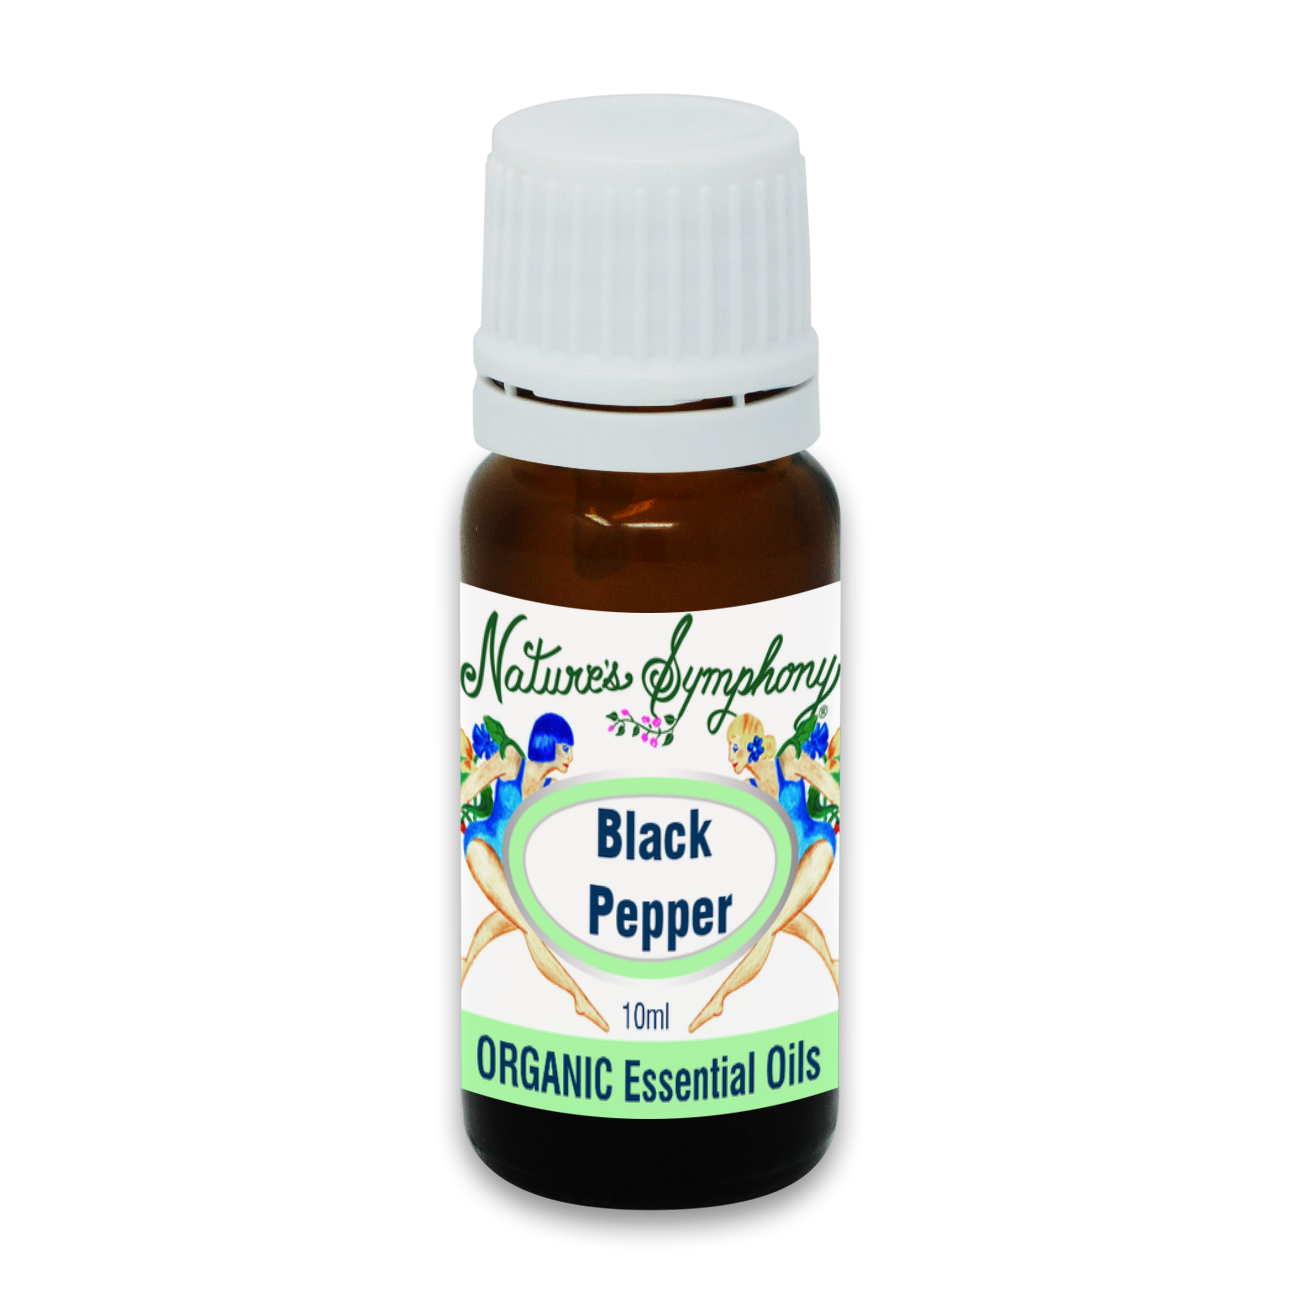 Black Pepper, Organic/Wildcrafted oil - 10ml